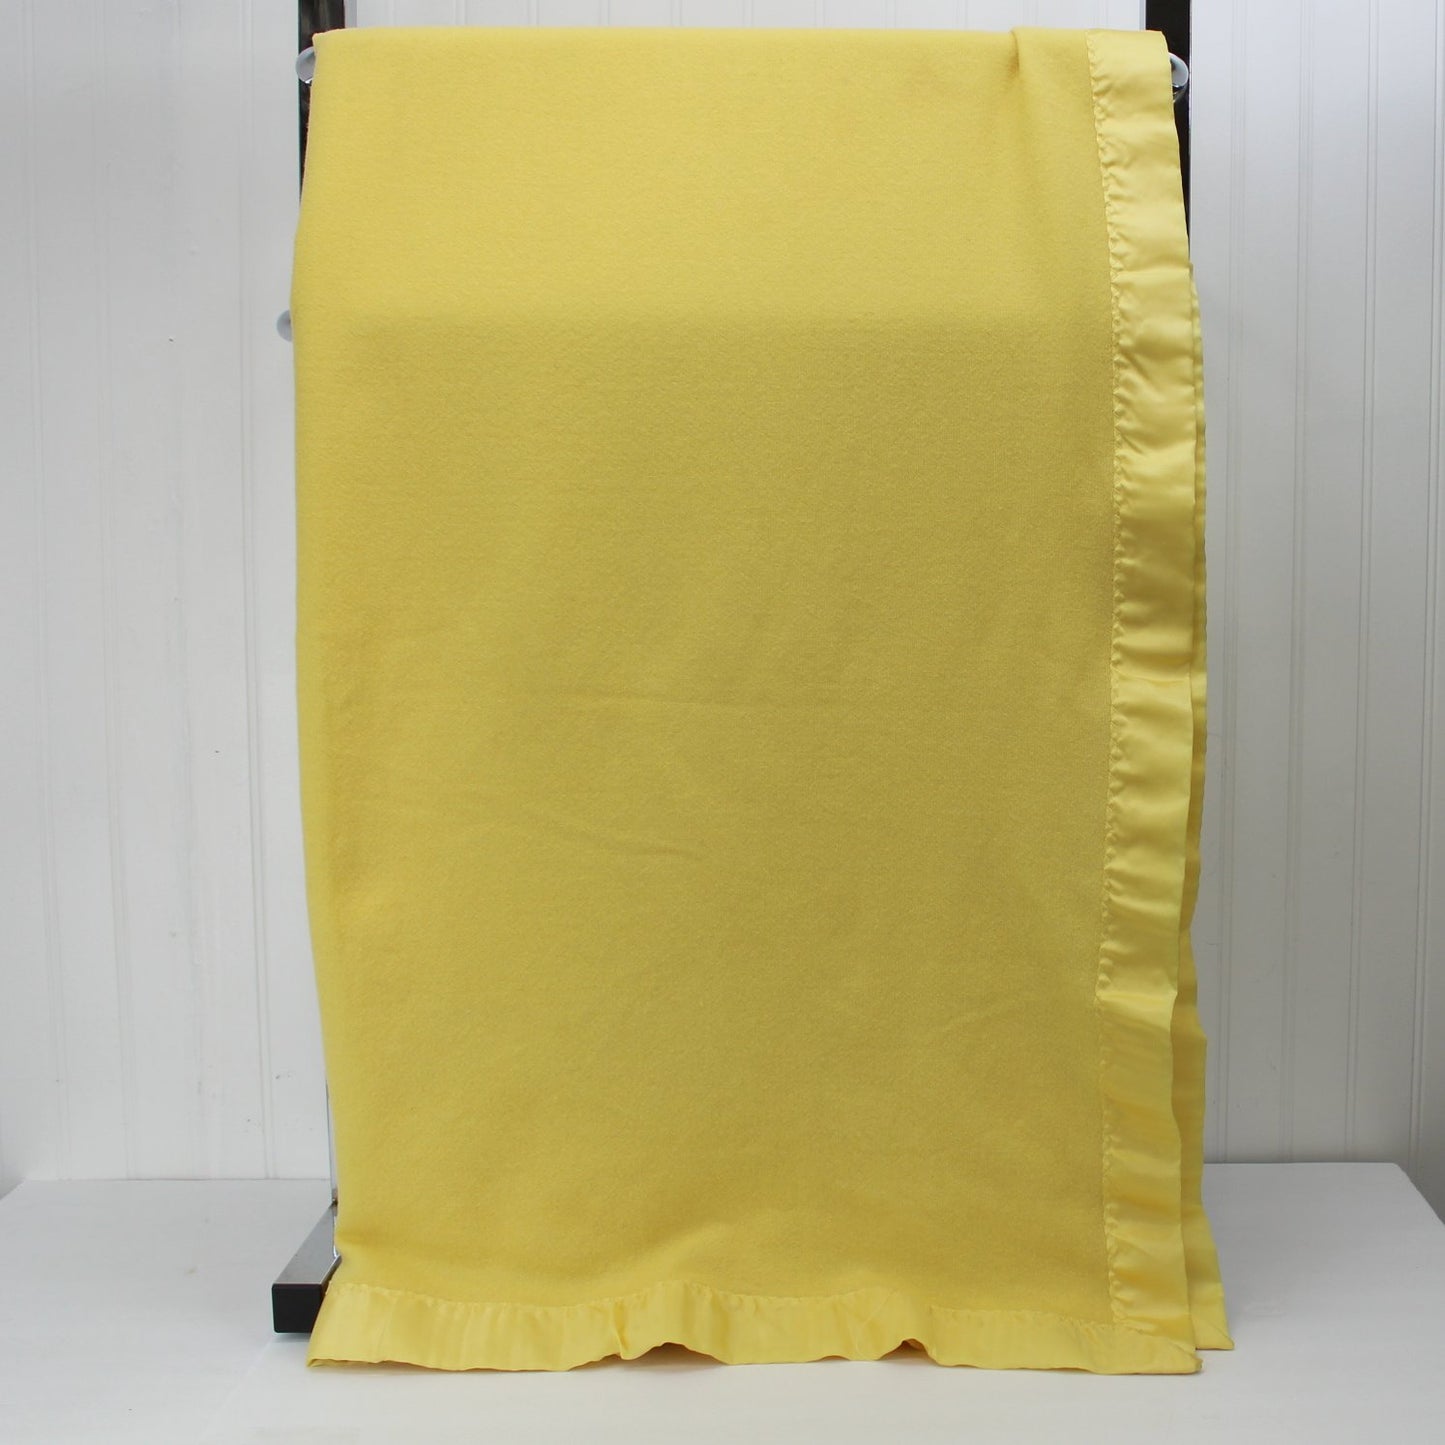 North Star Sheer Wool All Season Yellow Blanket Excellent Vintage vertical view of blanket showing 4 edge binding